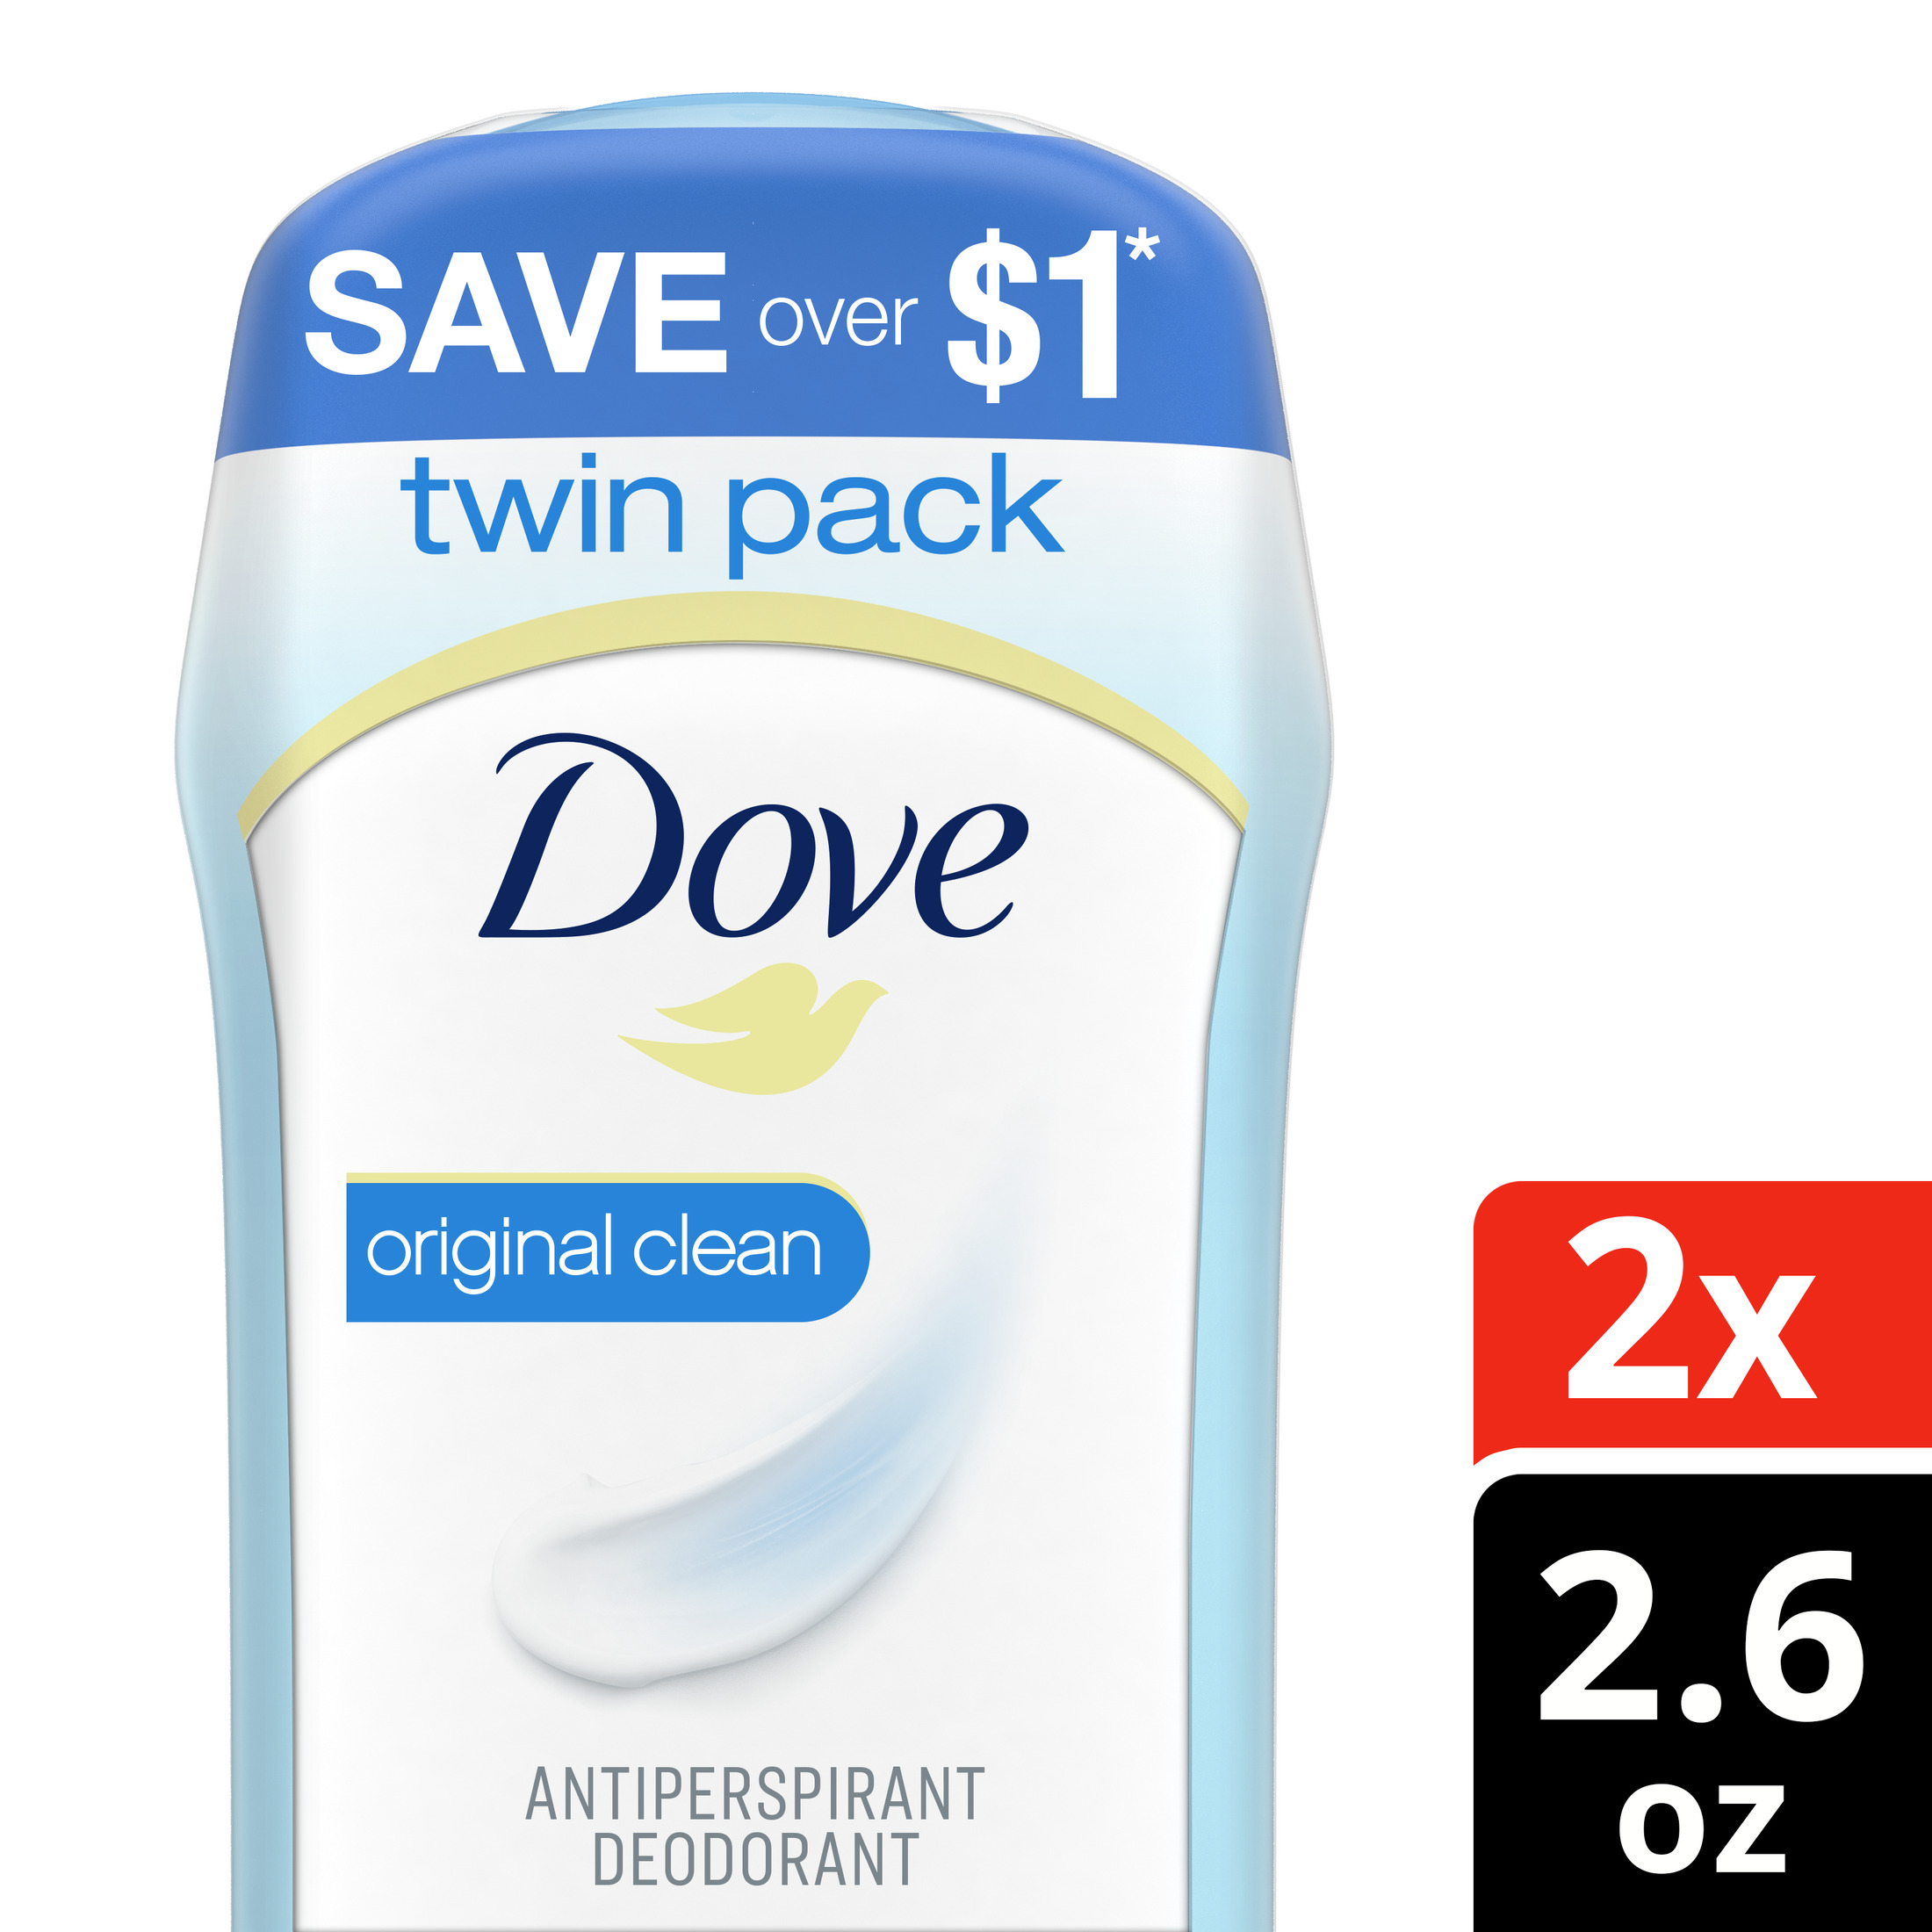 Dove Women's Antiperspirant Deodorant Stick Twin Pack, Original Clean, 2.6 oz - image 3 of 12